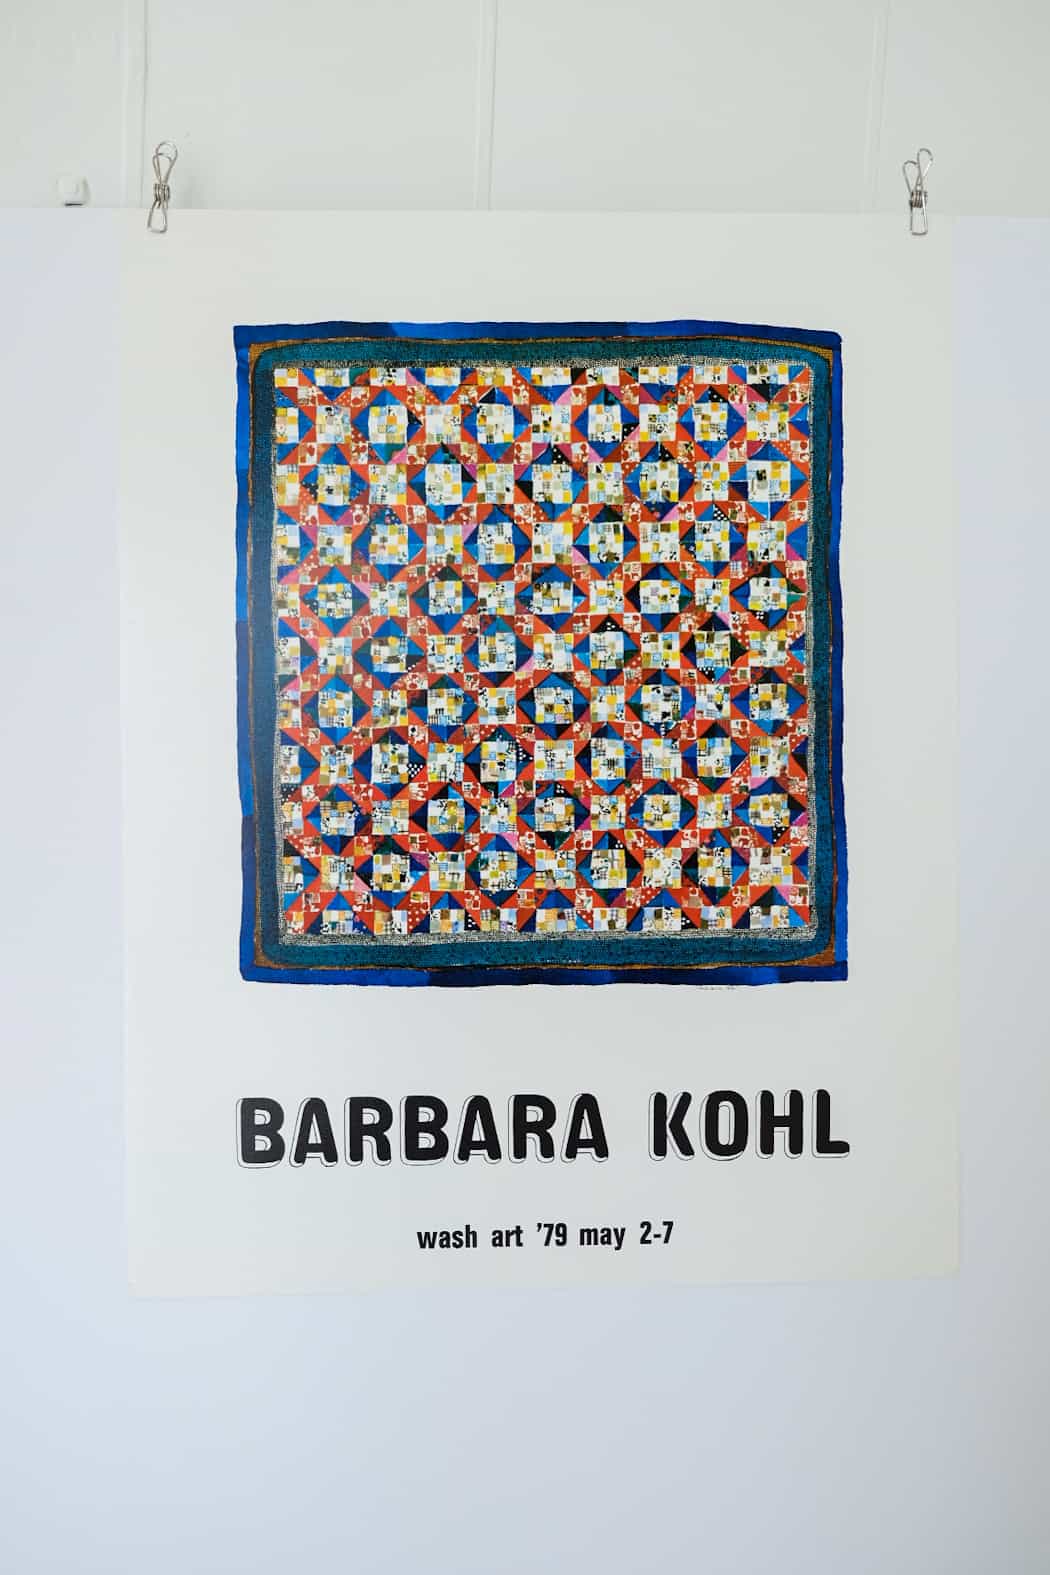 Wash Art'79 by Barbara Kohl